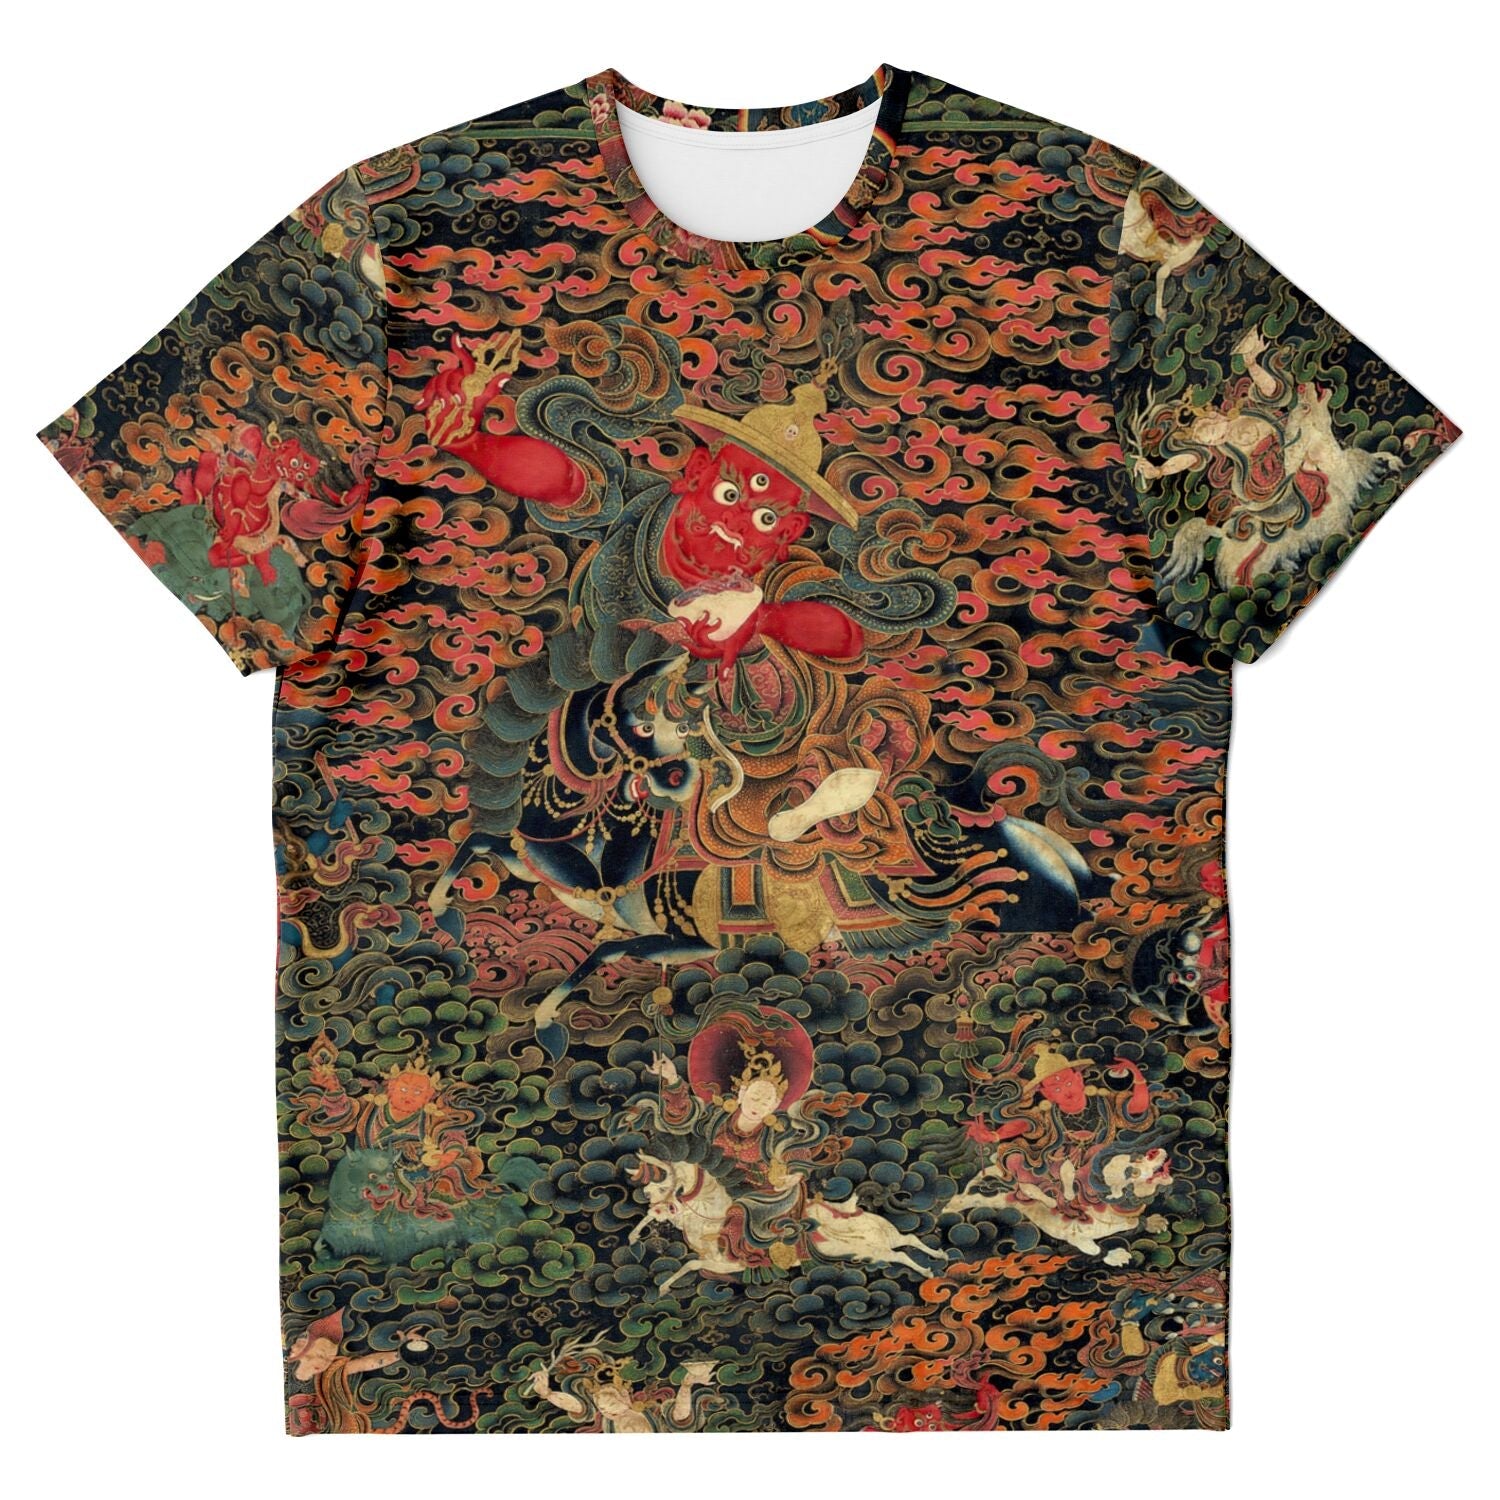 T-shirt XS Pehar: Tibetan Worldly Protector | Protection Prosperity Success Deity | Buddhist Shaman Thangka Graphic Art T-Shirt